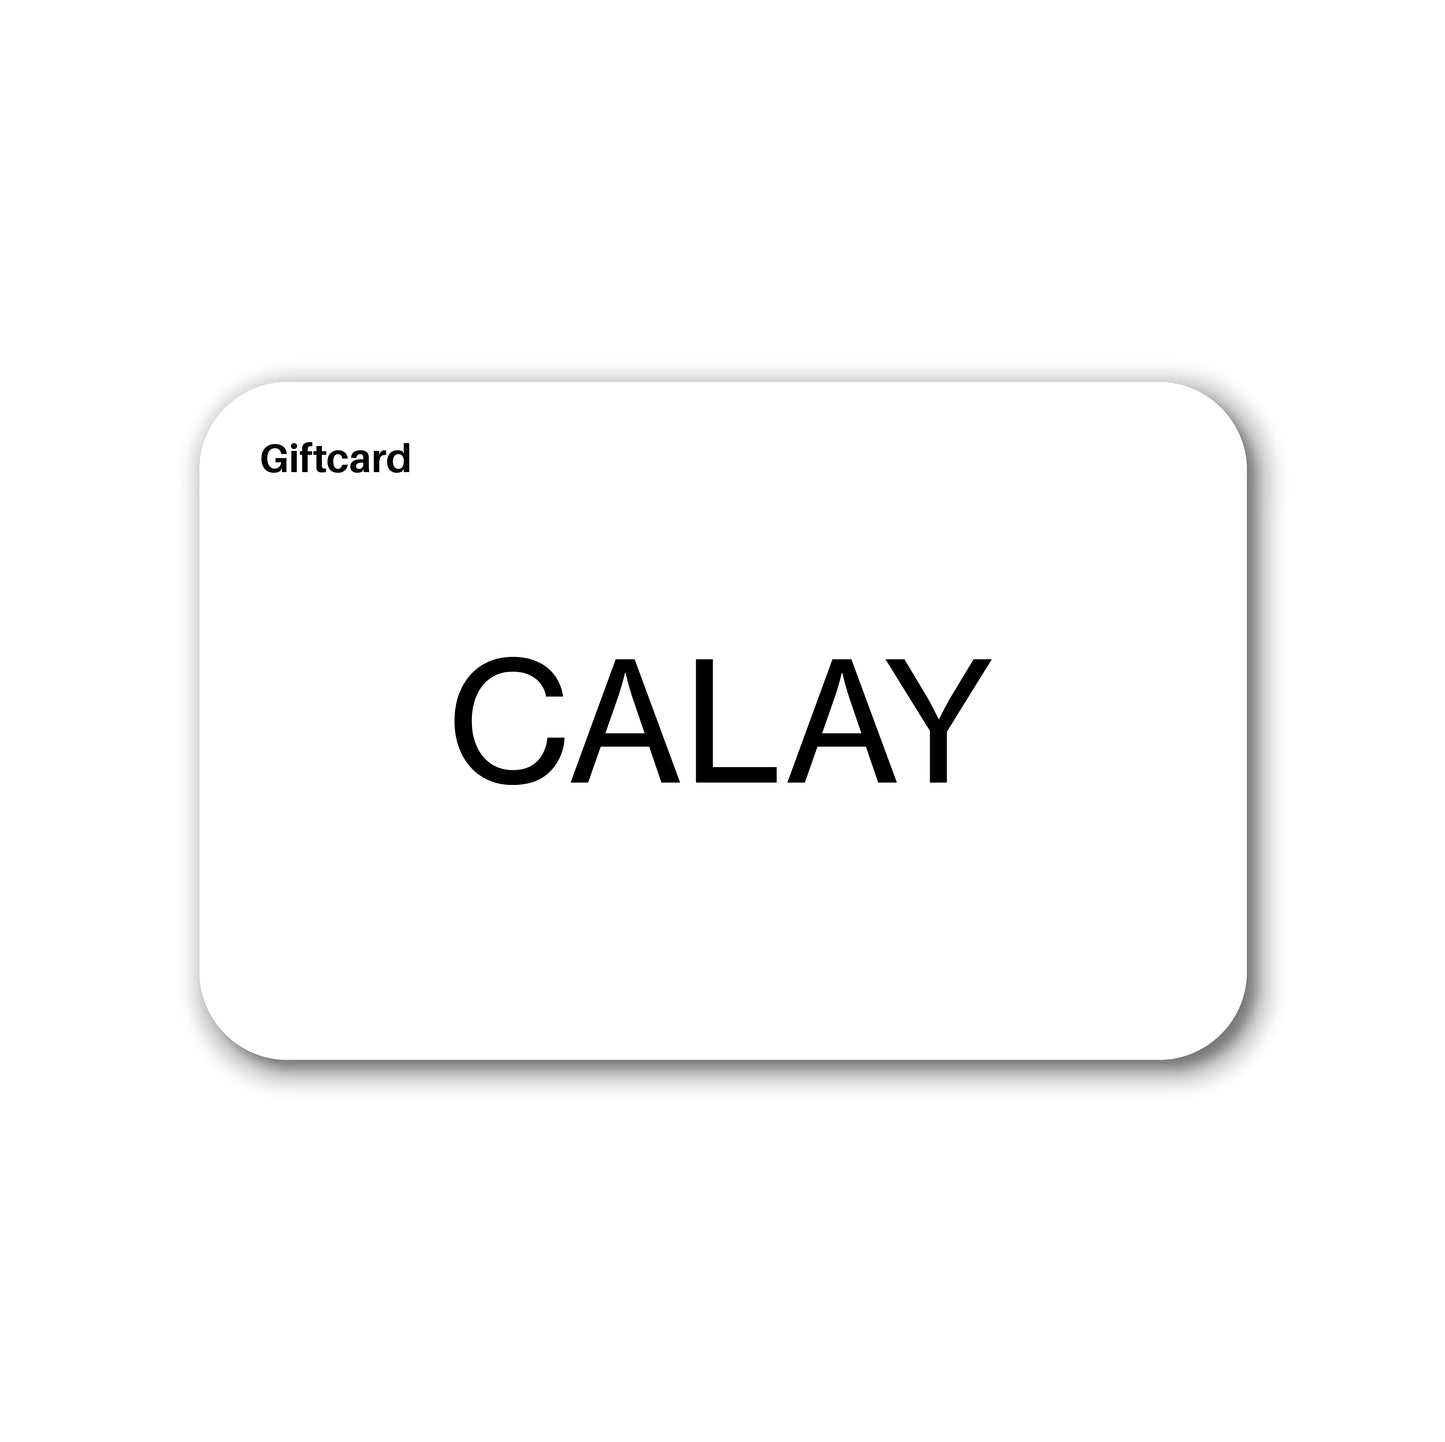 Calay Gift Card